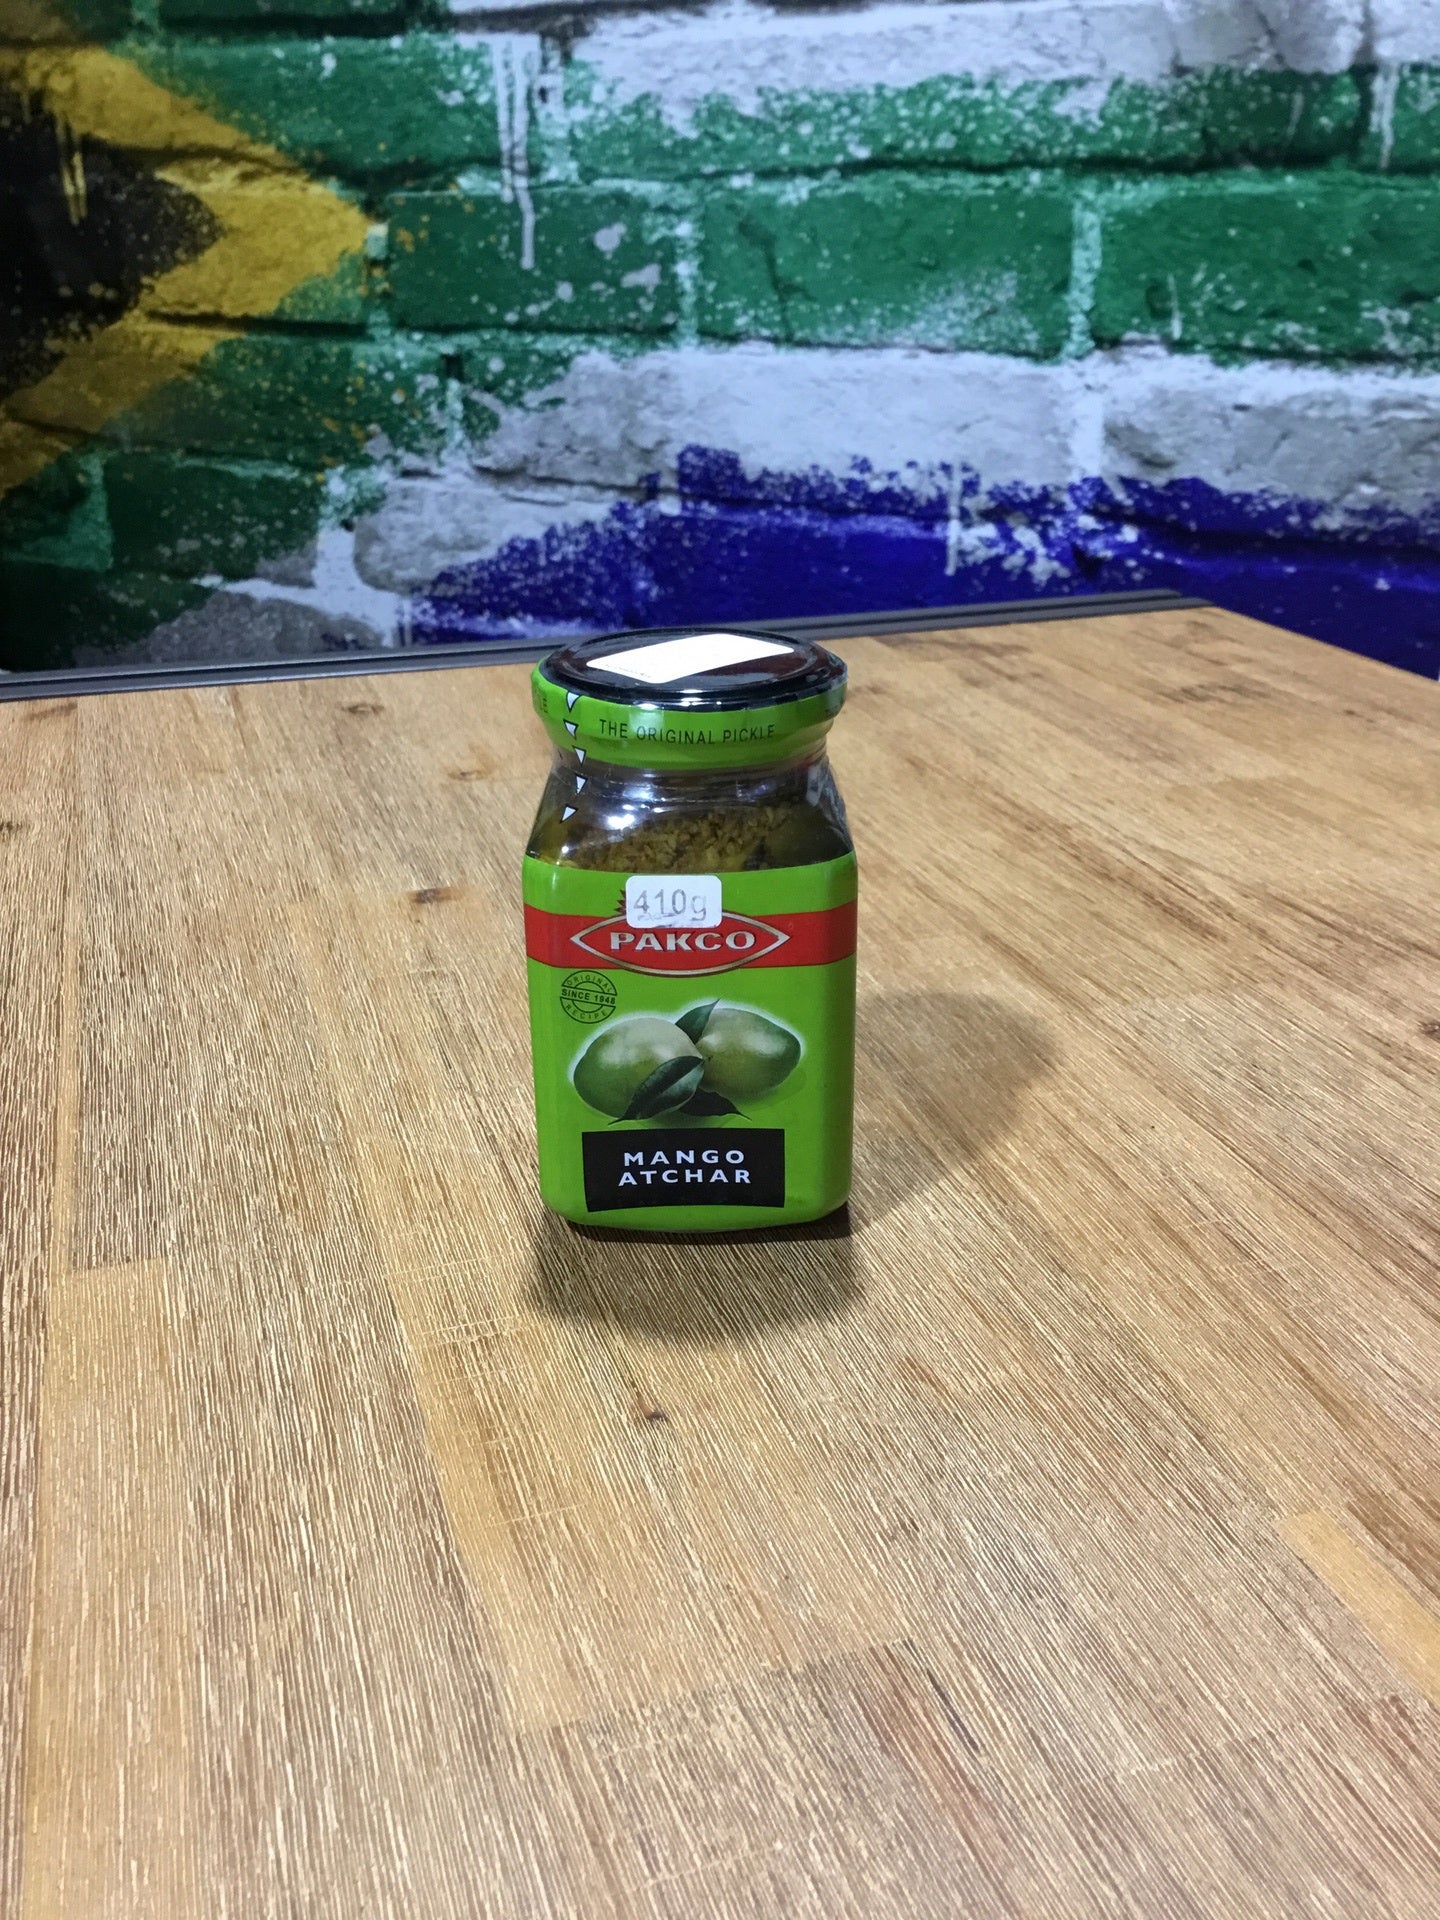 Pakco Chunky Mango Pickle 380g